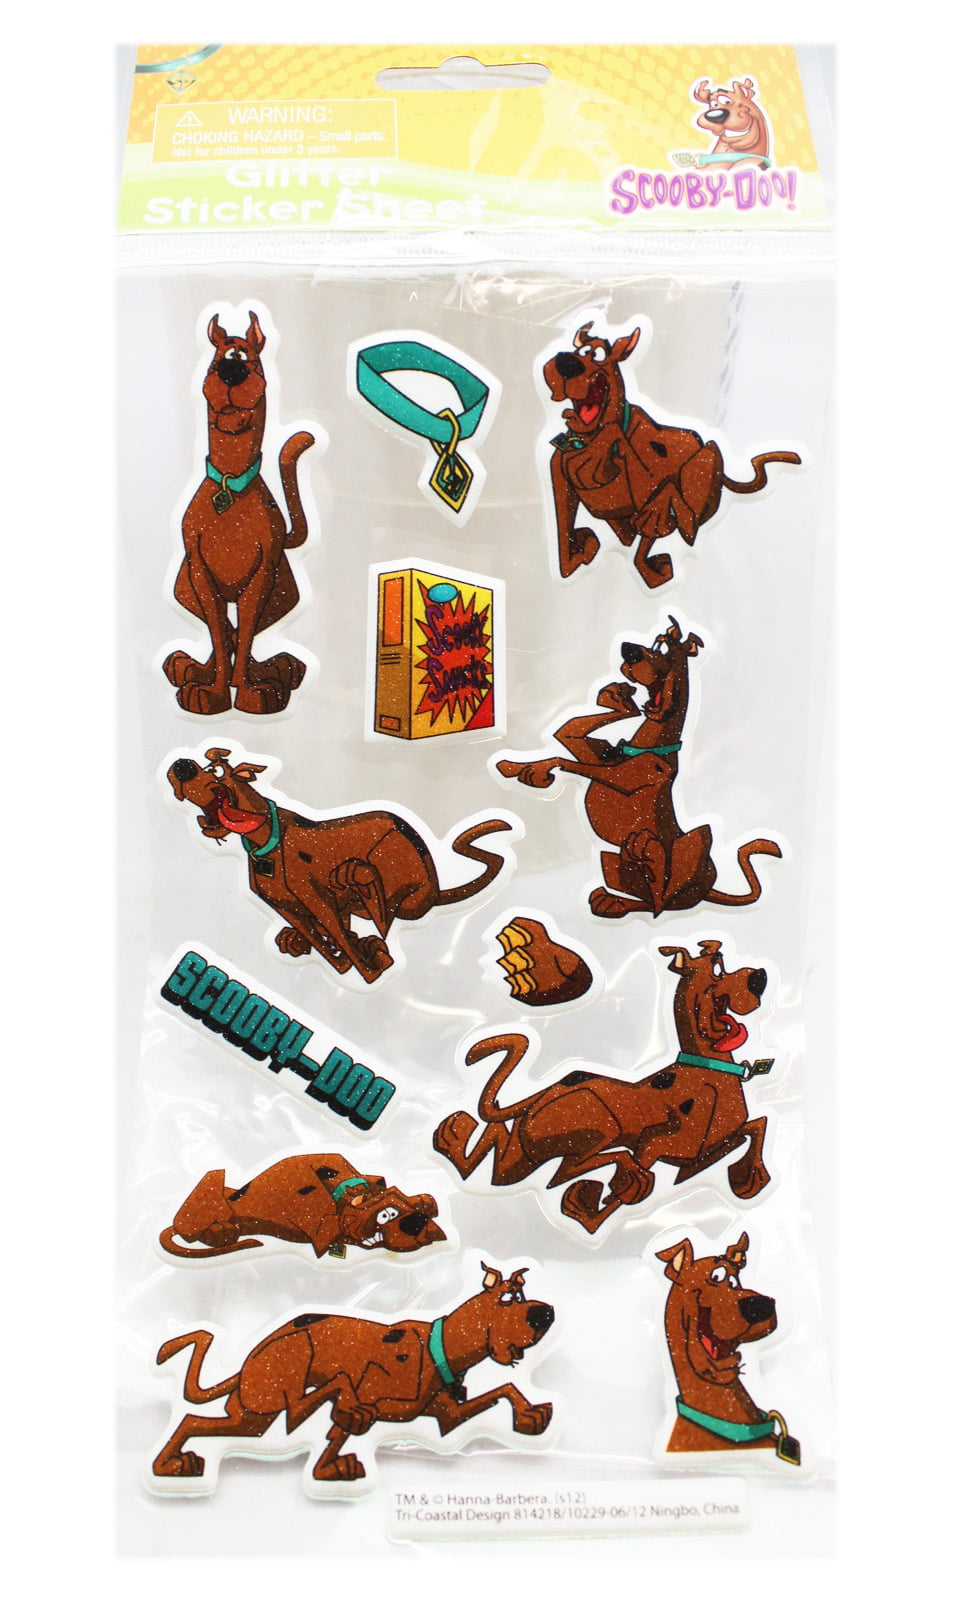 Scooby-Doo! Raised Glittery Sticker Sheet (12 Stickers) - Walmart.com